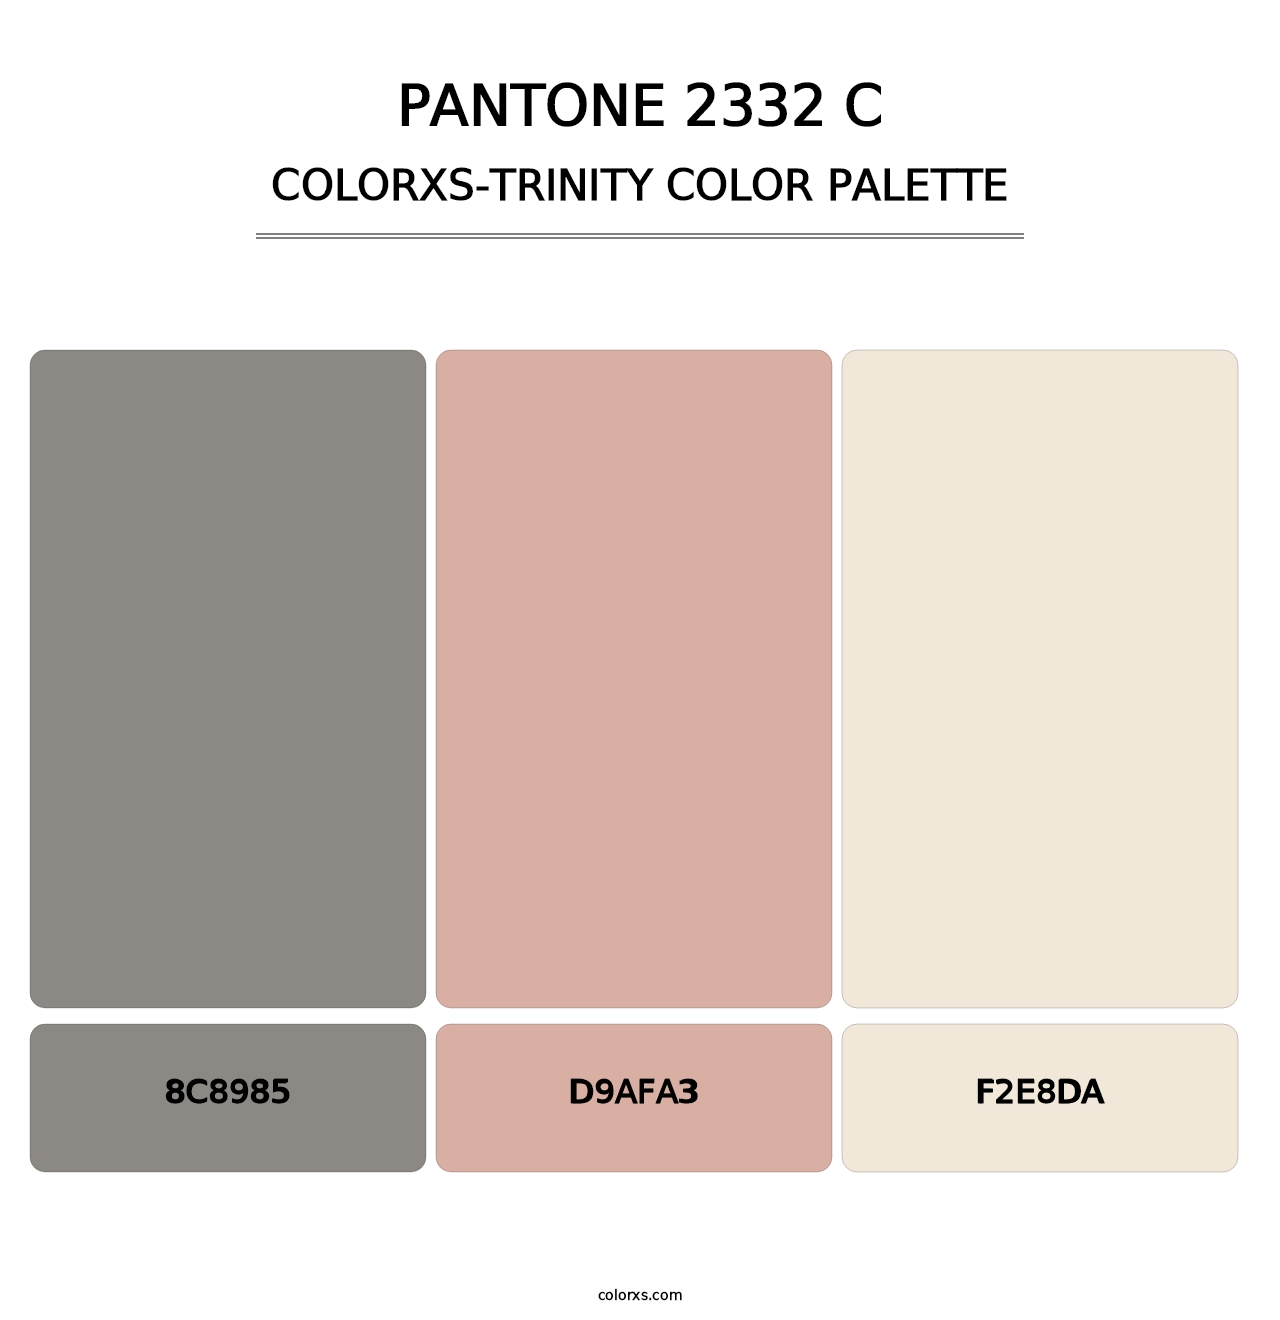 PANTONE 2332 C - Colorxs Trinity Palette